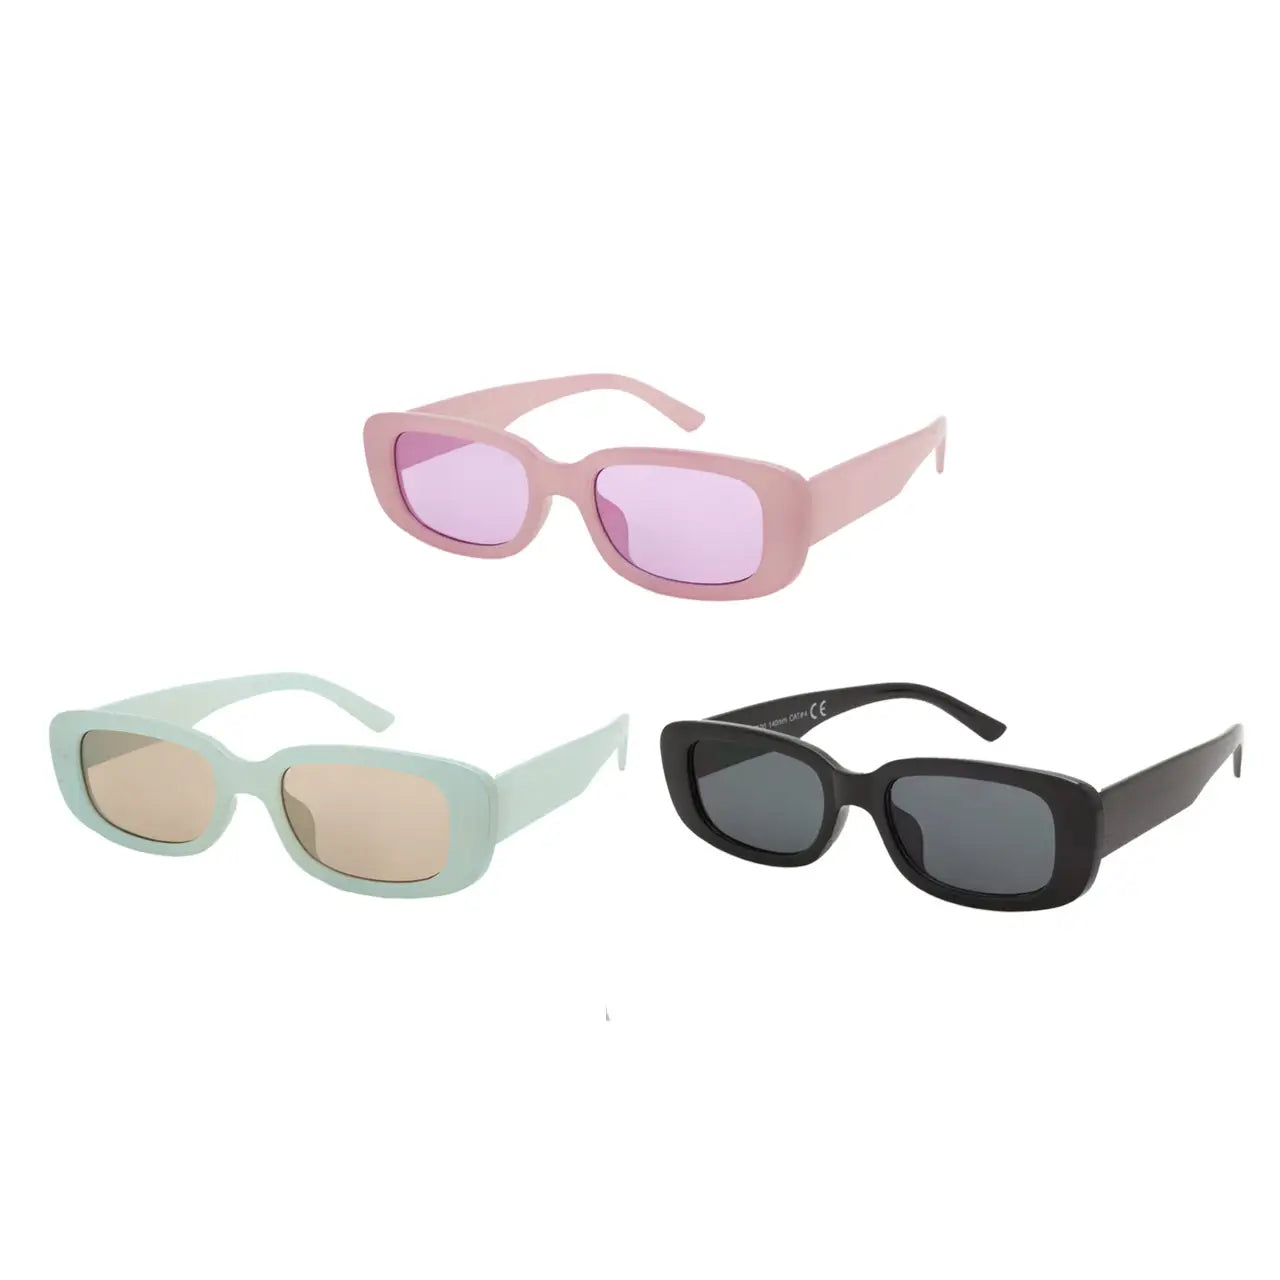 Coachella-style Fashion Sunglasses